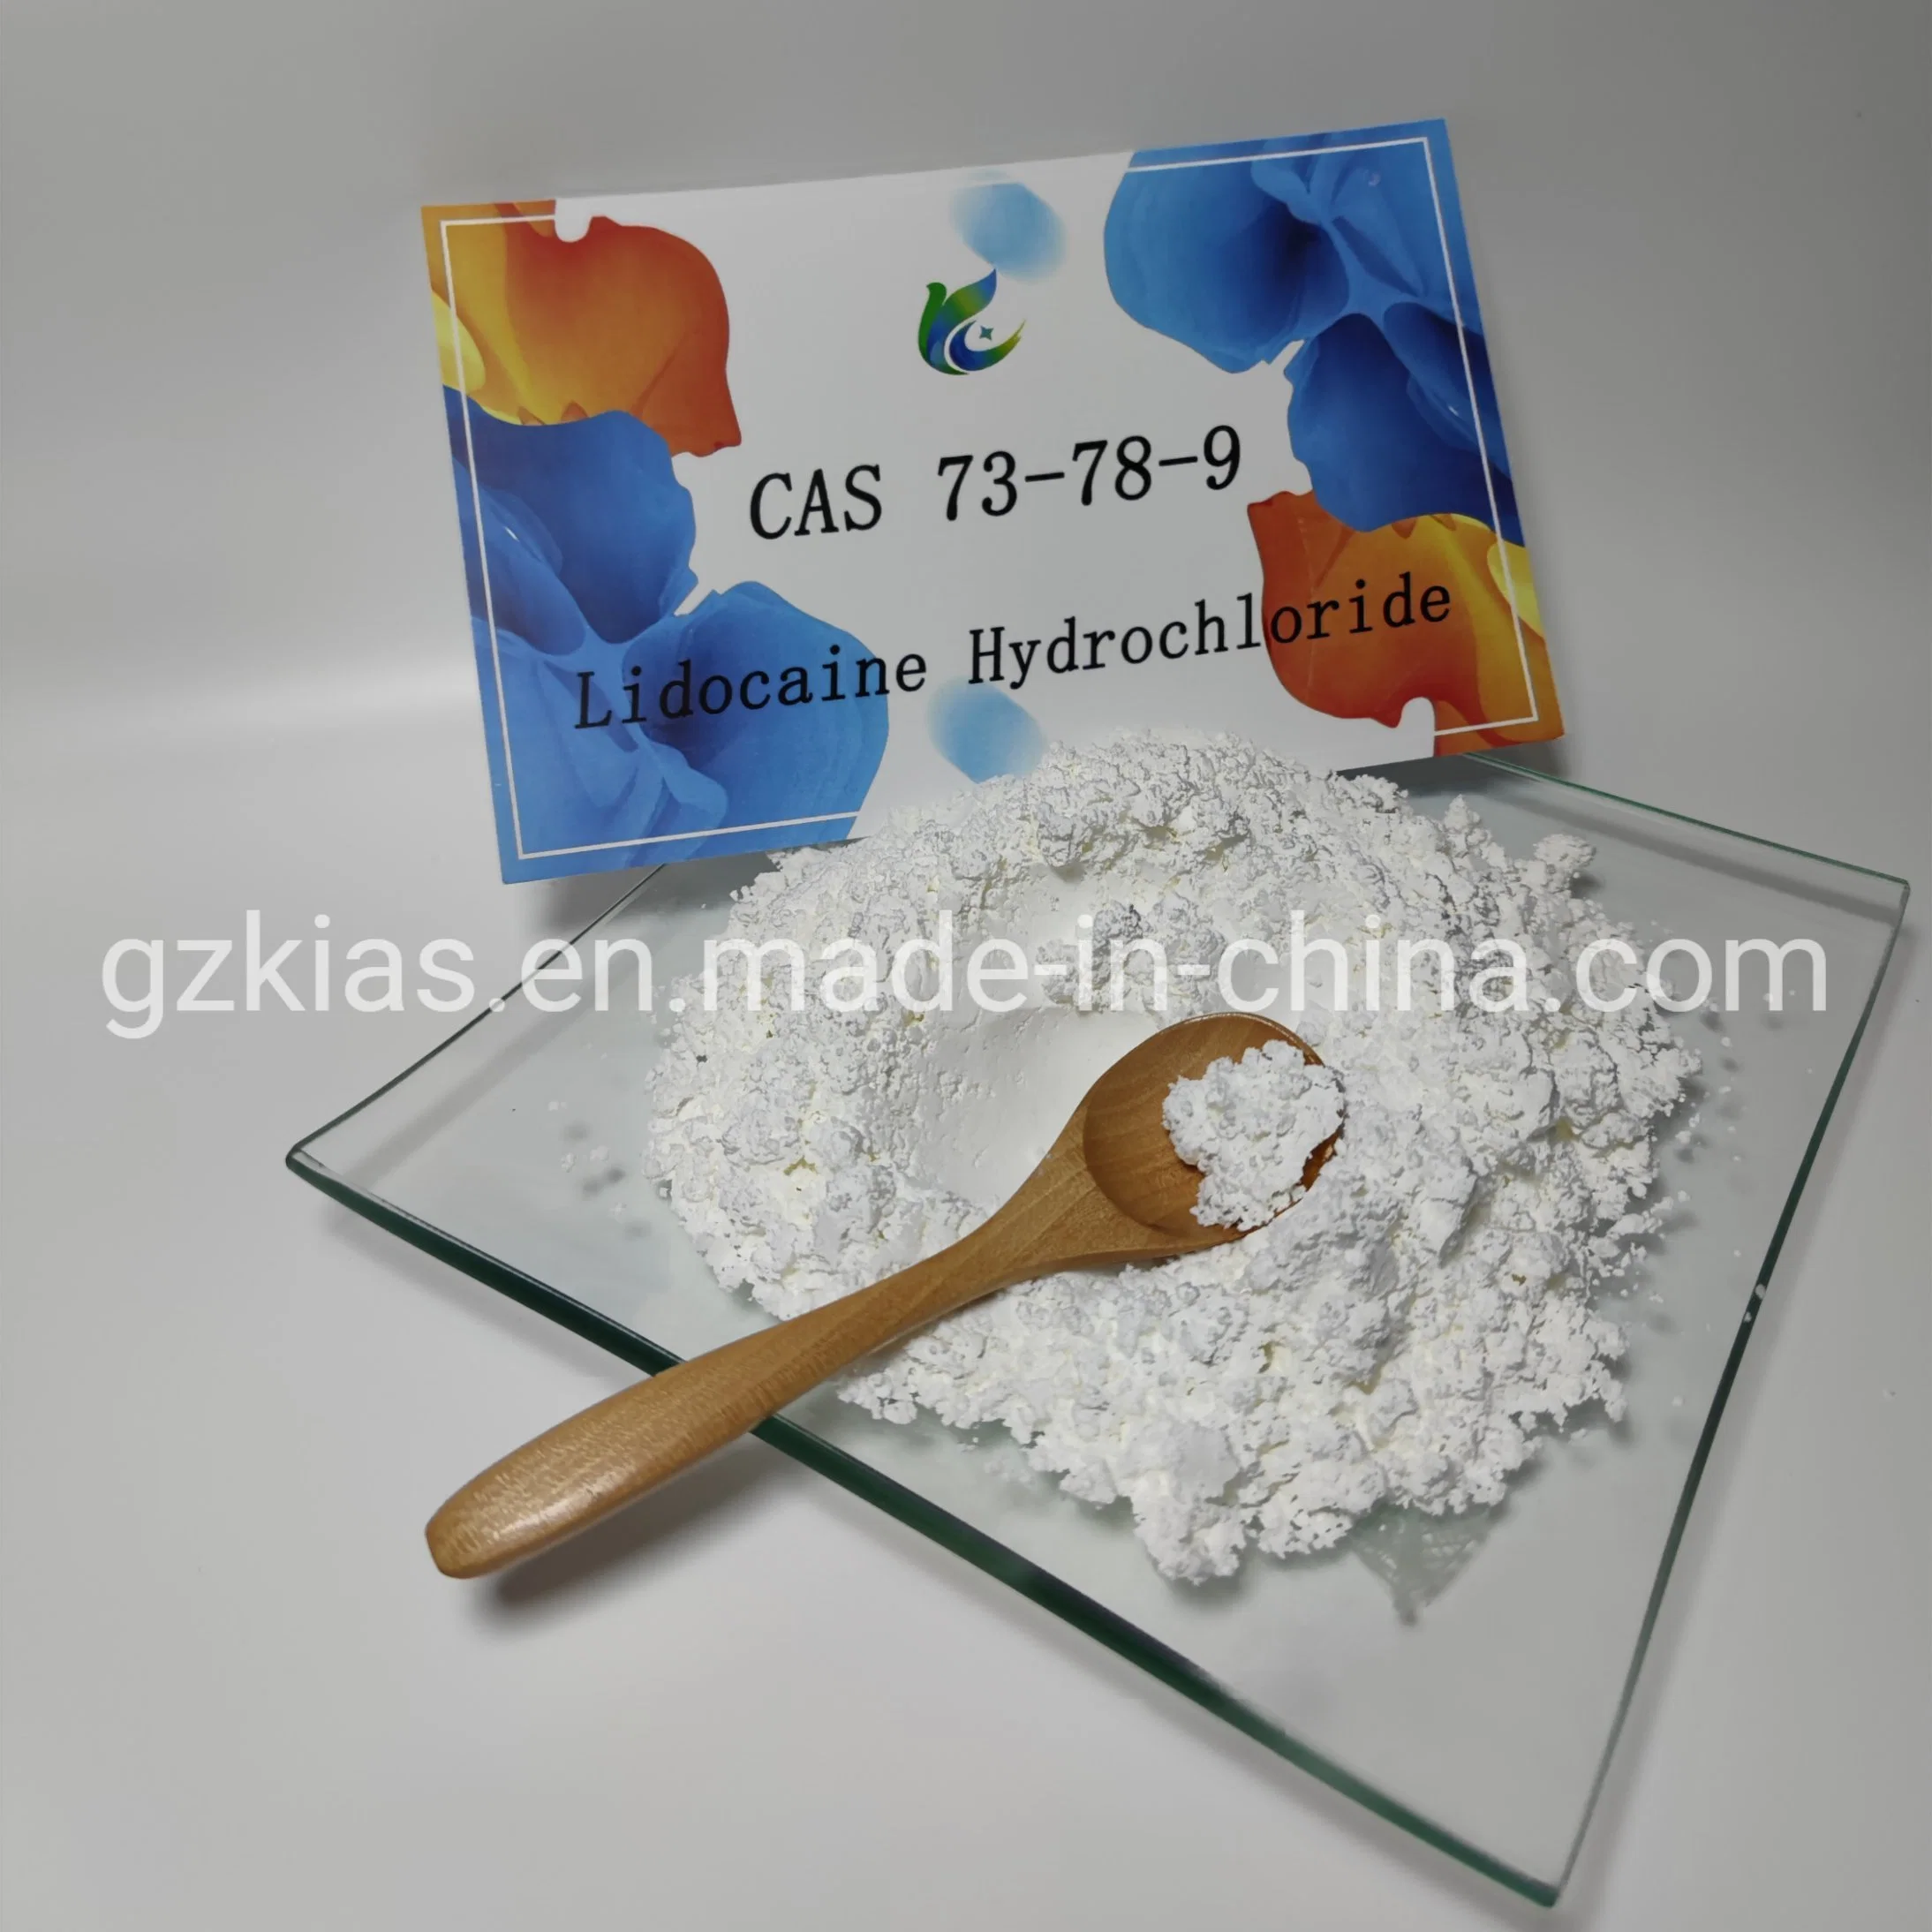 99% Local Anesthesia Drugs R Lidocaine HCl / Lidocaine Hydrochloride CAS 73-78-9 Benzocaine Procaine Tetracaine SA EU UK Canada Warehouse Stock Lidocaine Powder